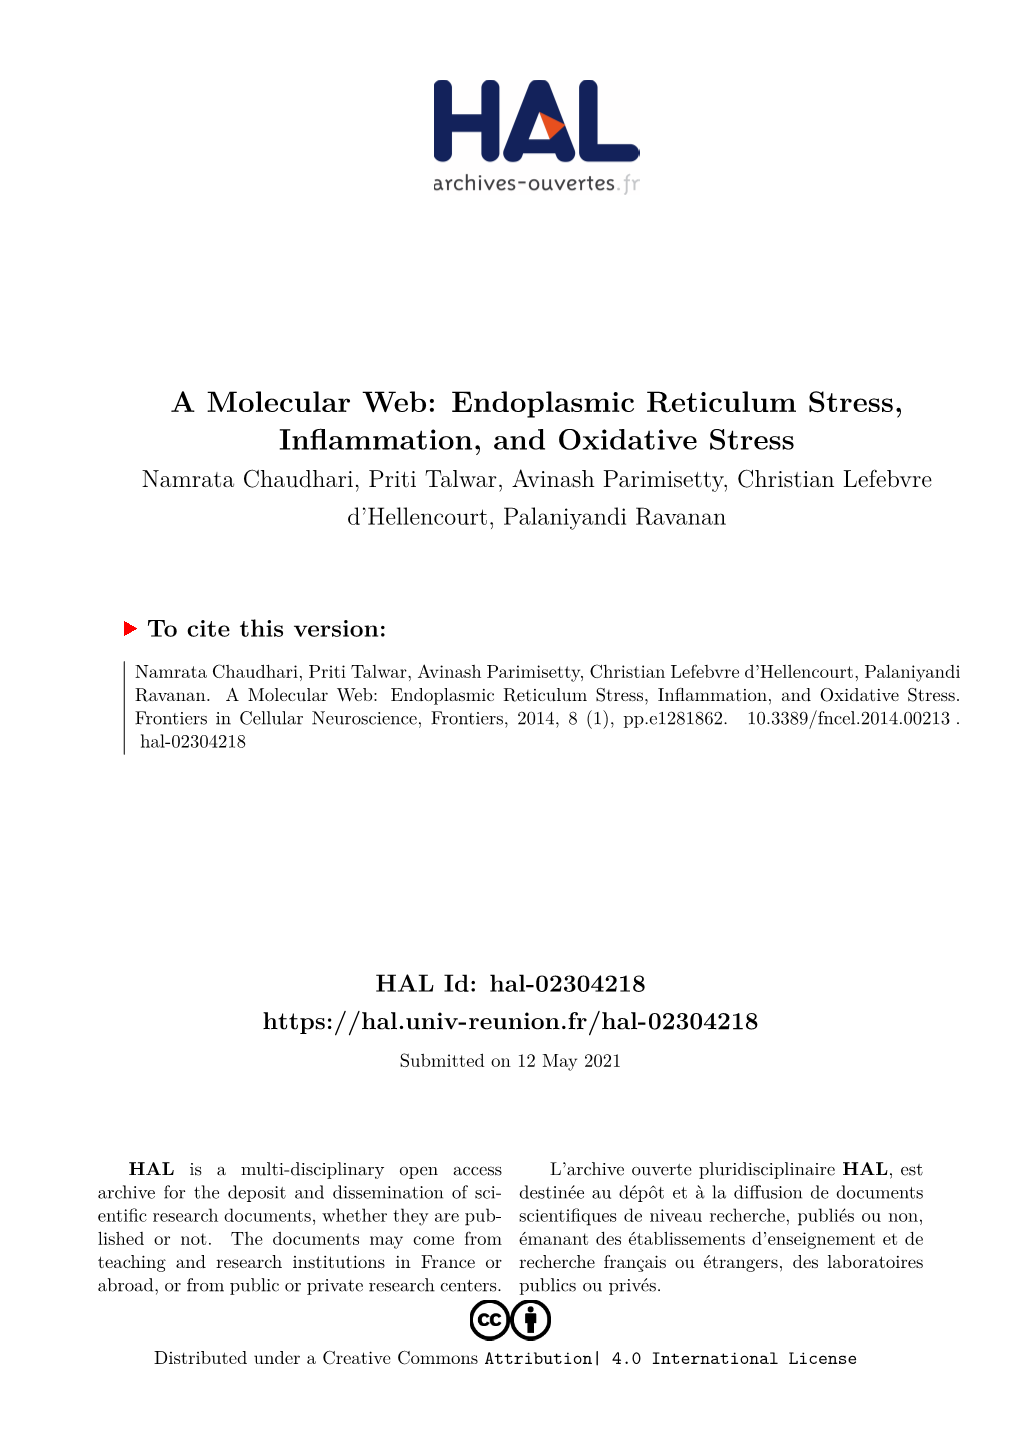 Endoplasmic Reticulum Stress, Inflammation, and Oxidative Stress